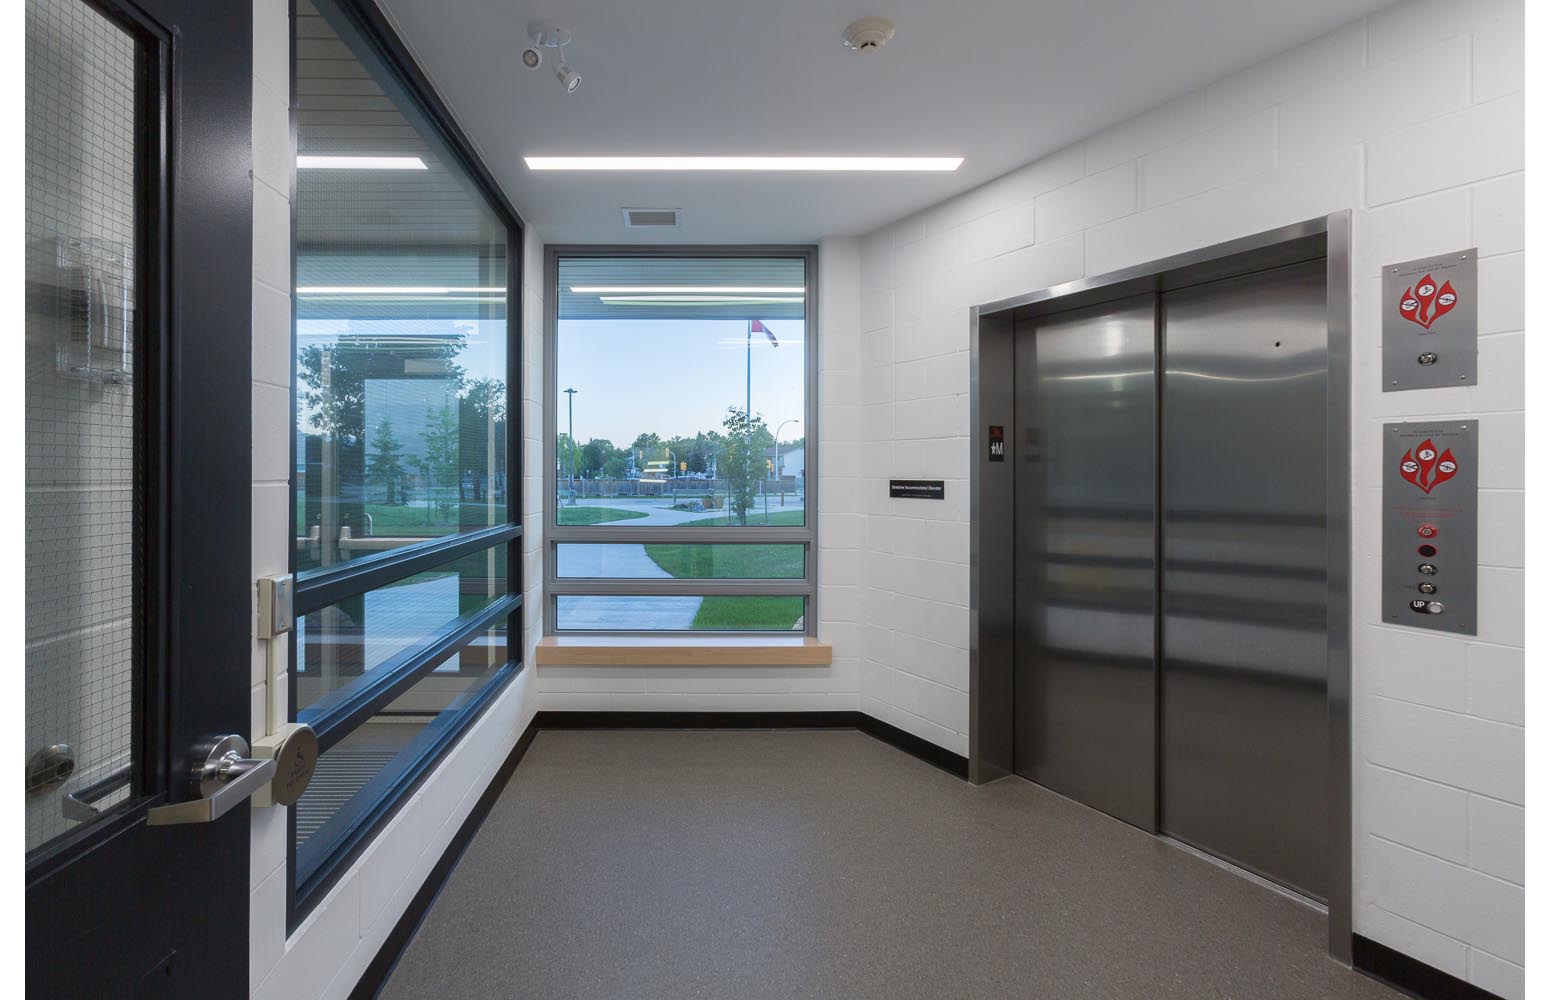  Dalhousie School Elevator Addition, interior of elevator entrance / Photo:  Lindsay Reid  